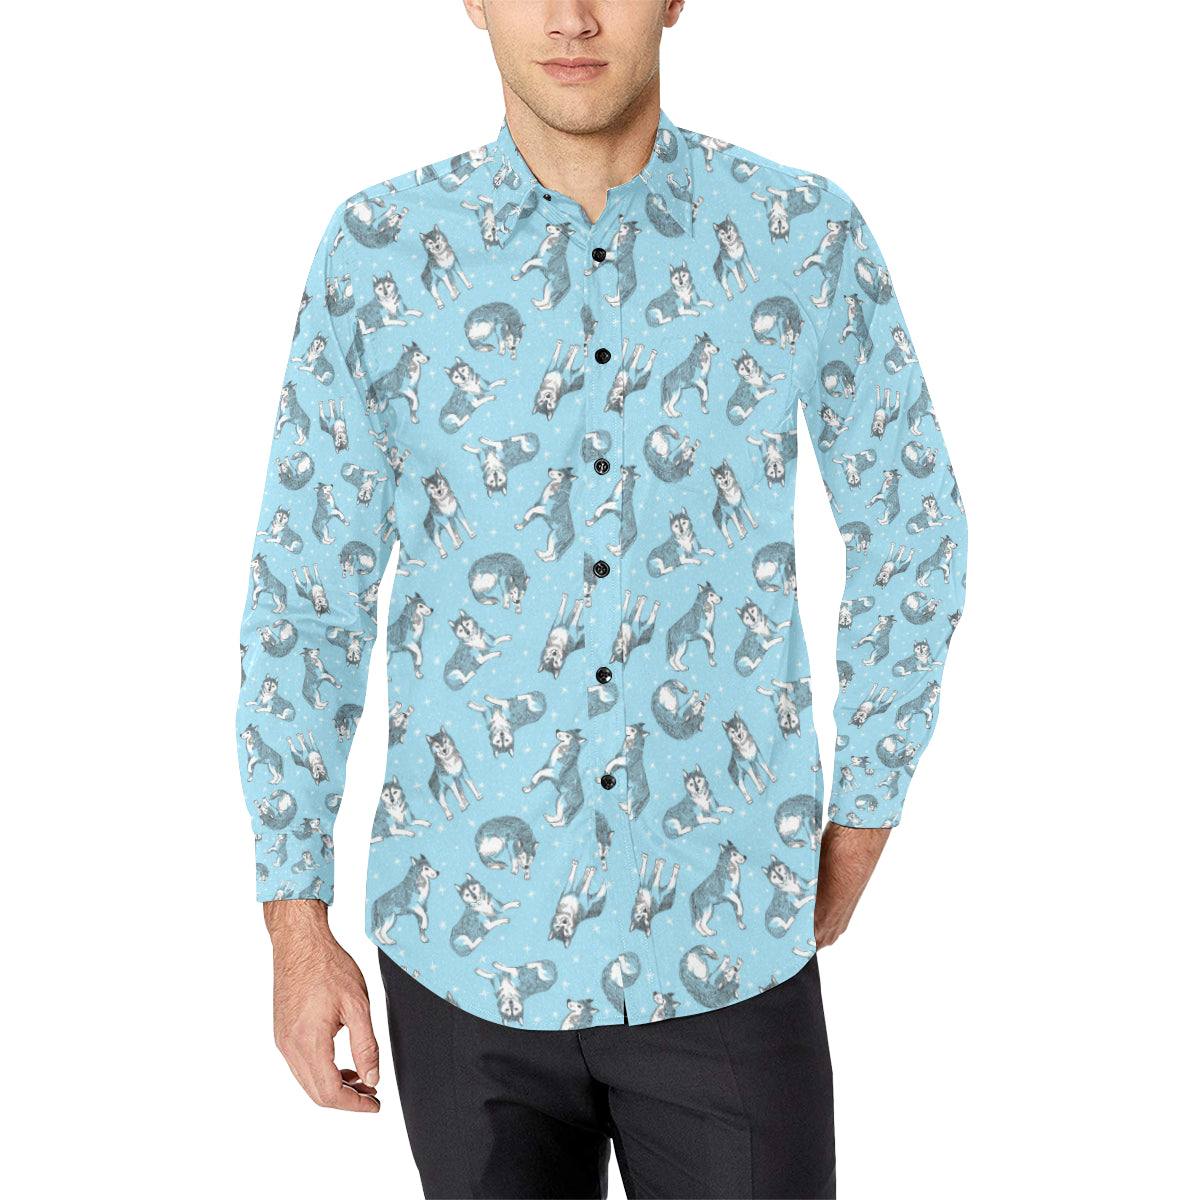 Wolf Design Print Pattern Men's Long Sleeve Shirt